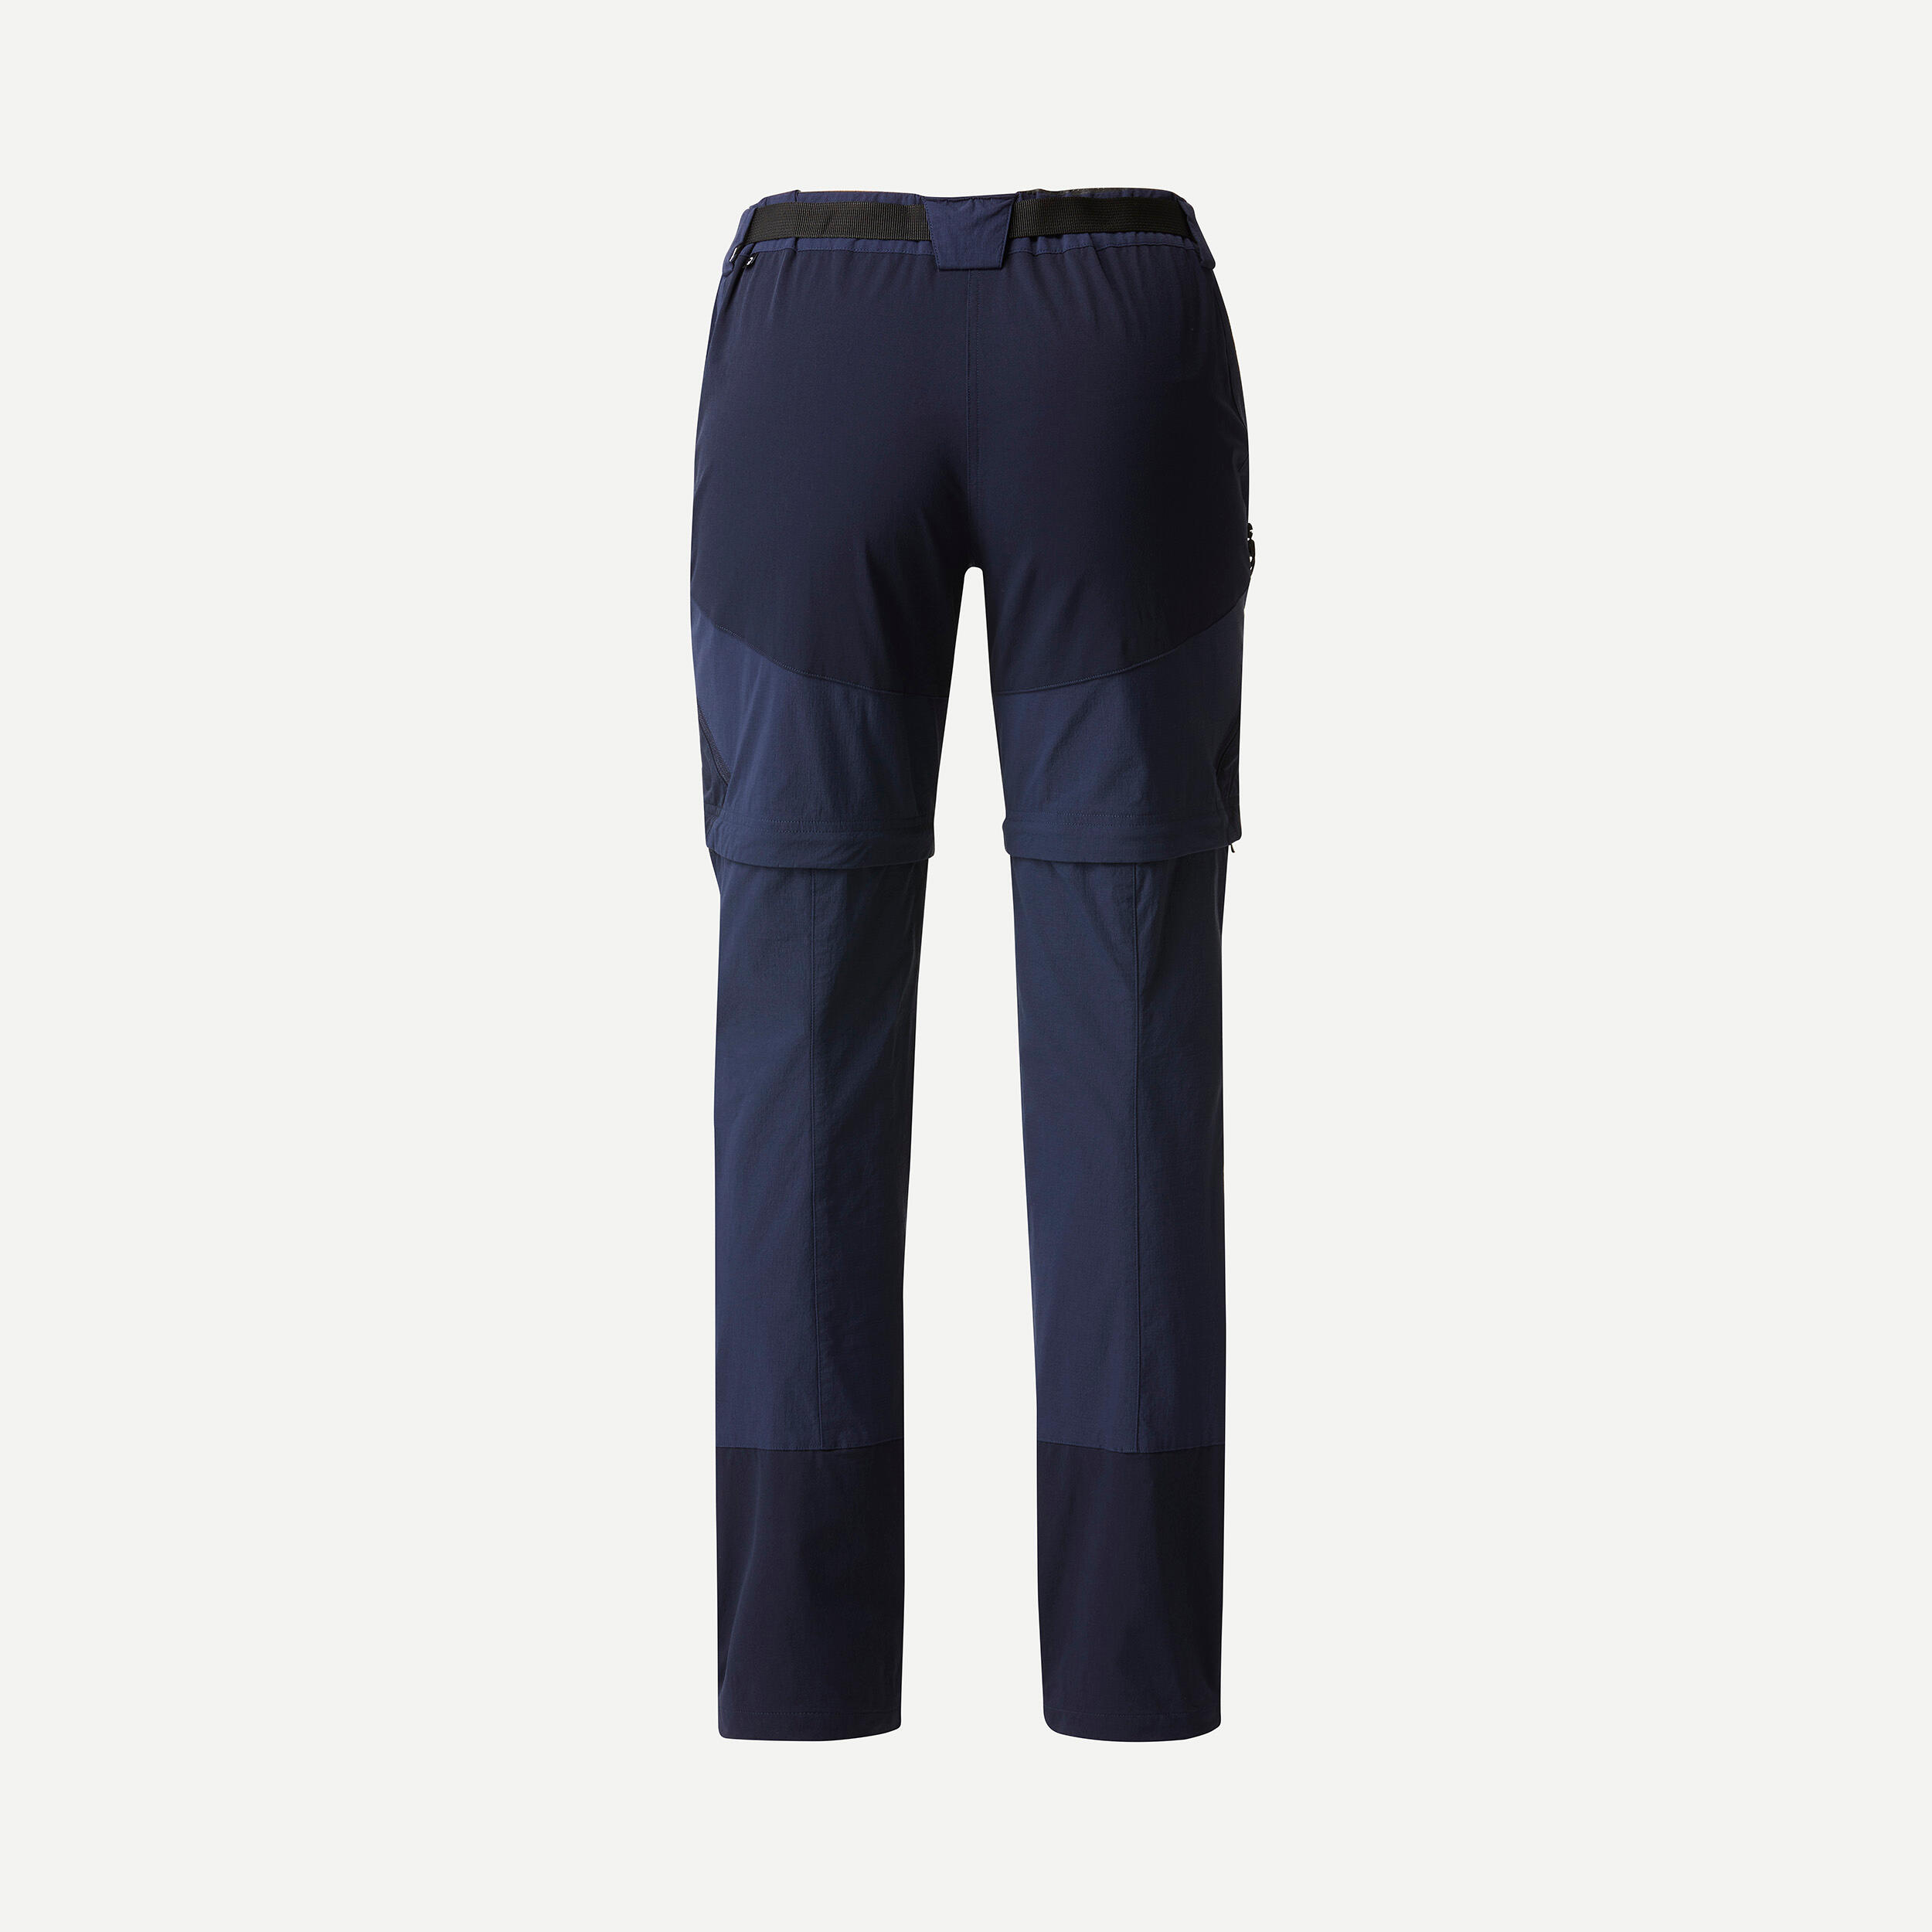 Women's 2-in-1 Hiking Pants - MT 500 - Navy blue, Asphalt blue - Forclaz -  Decathlon